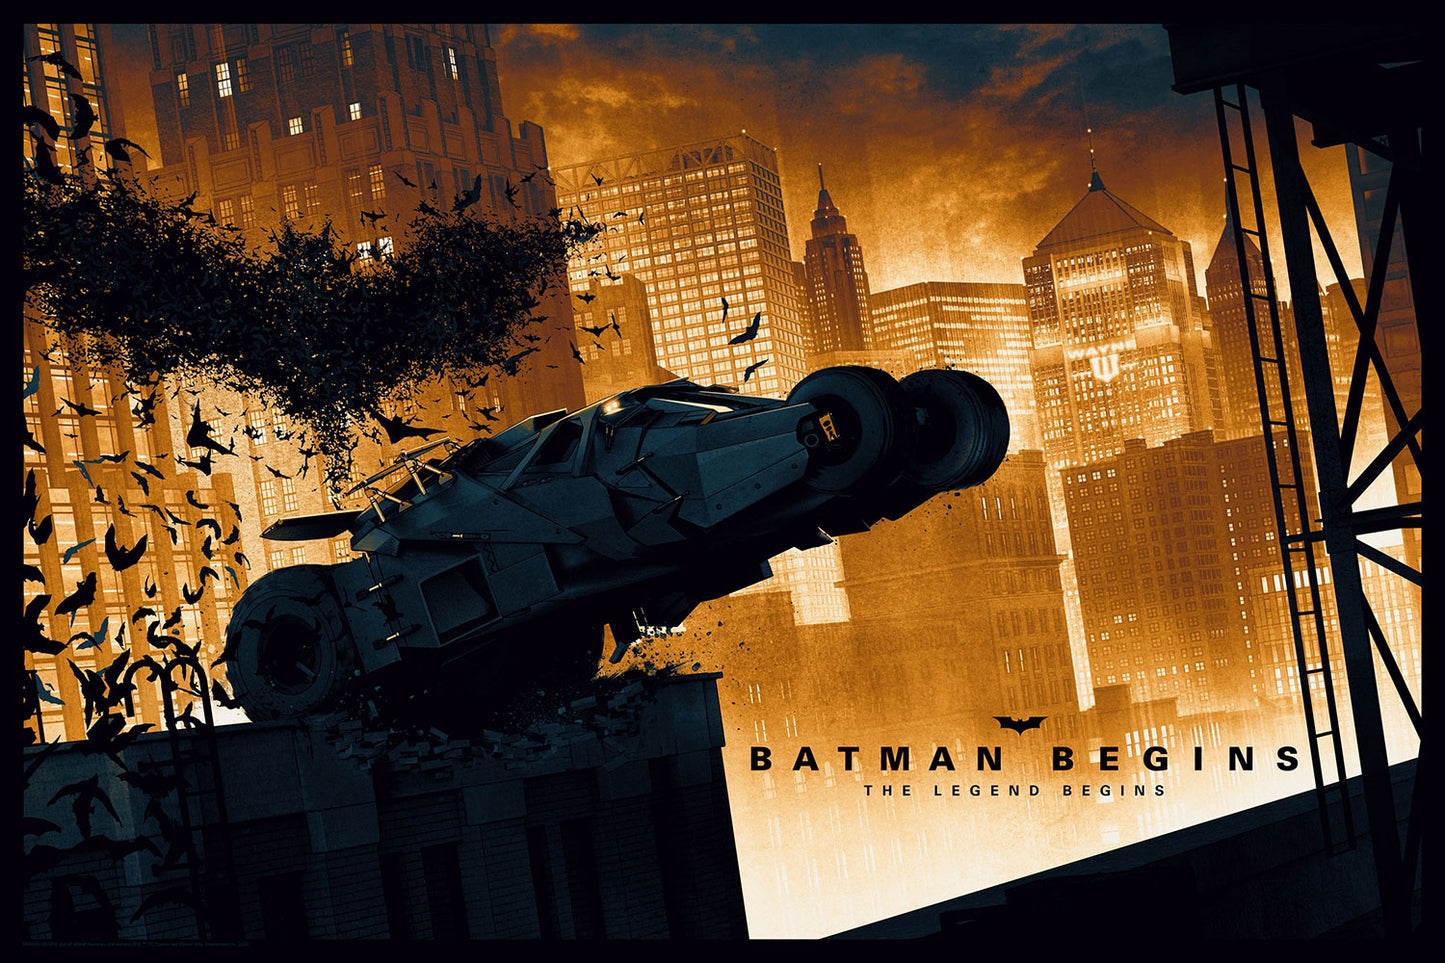 Matt Ferguson "Batman Begins"